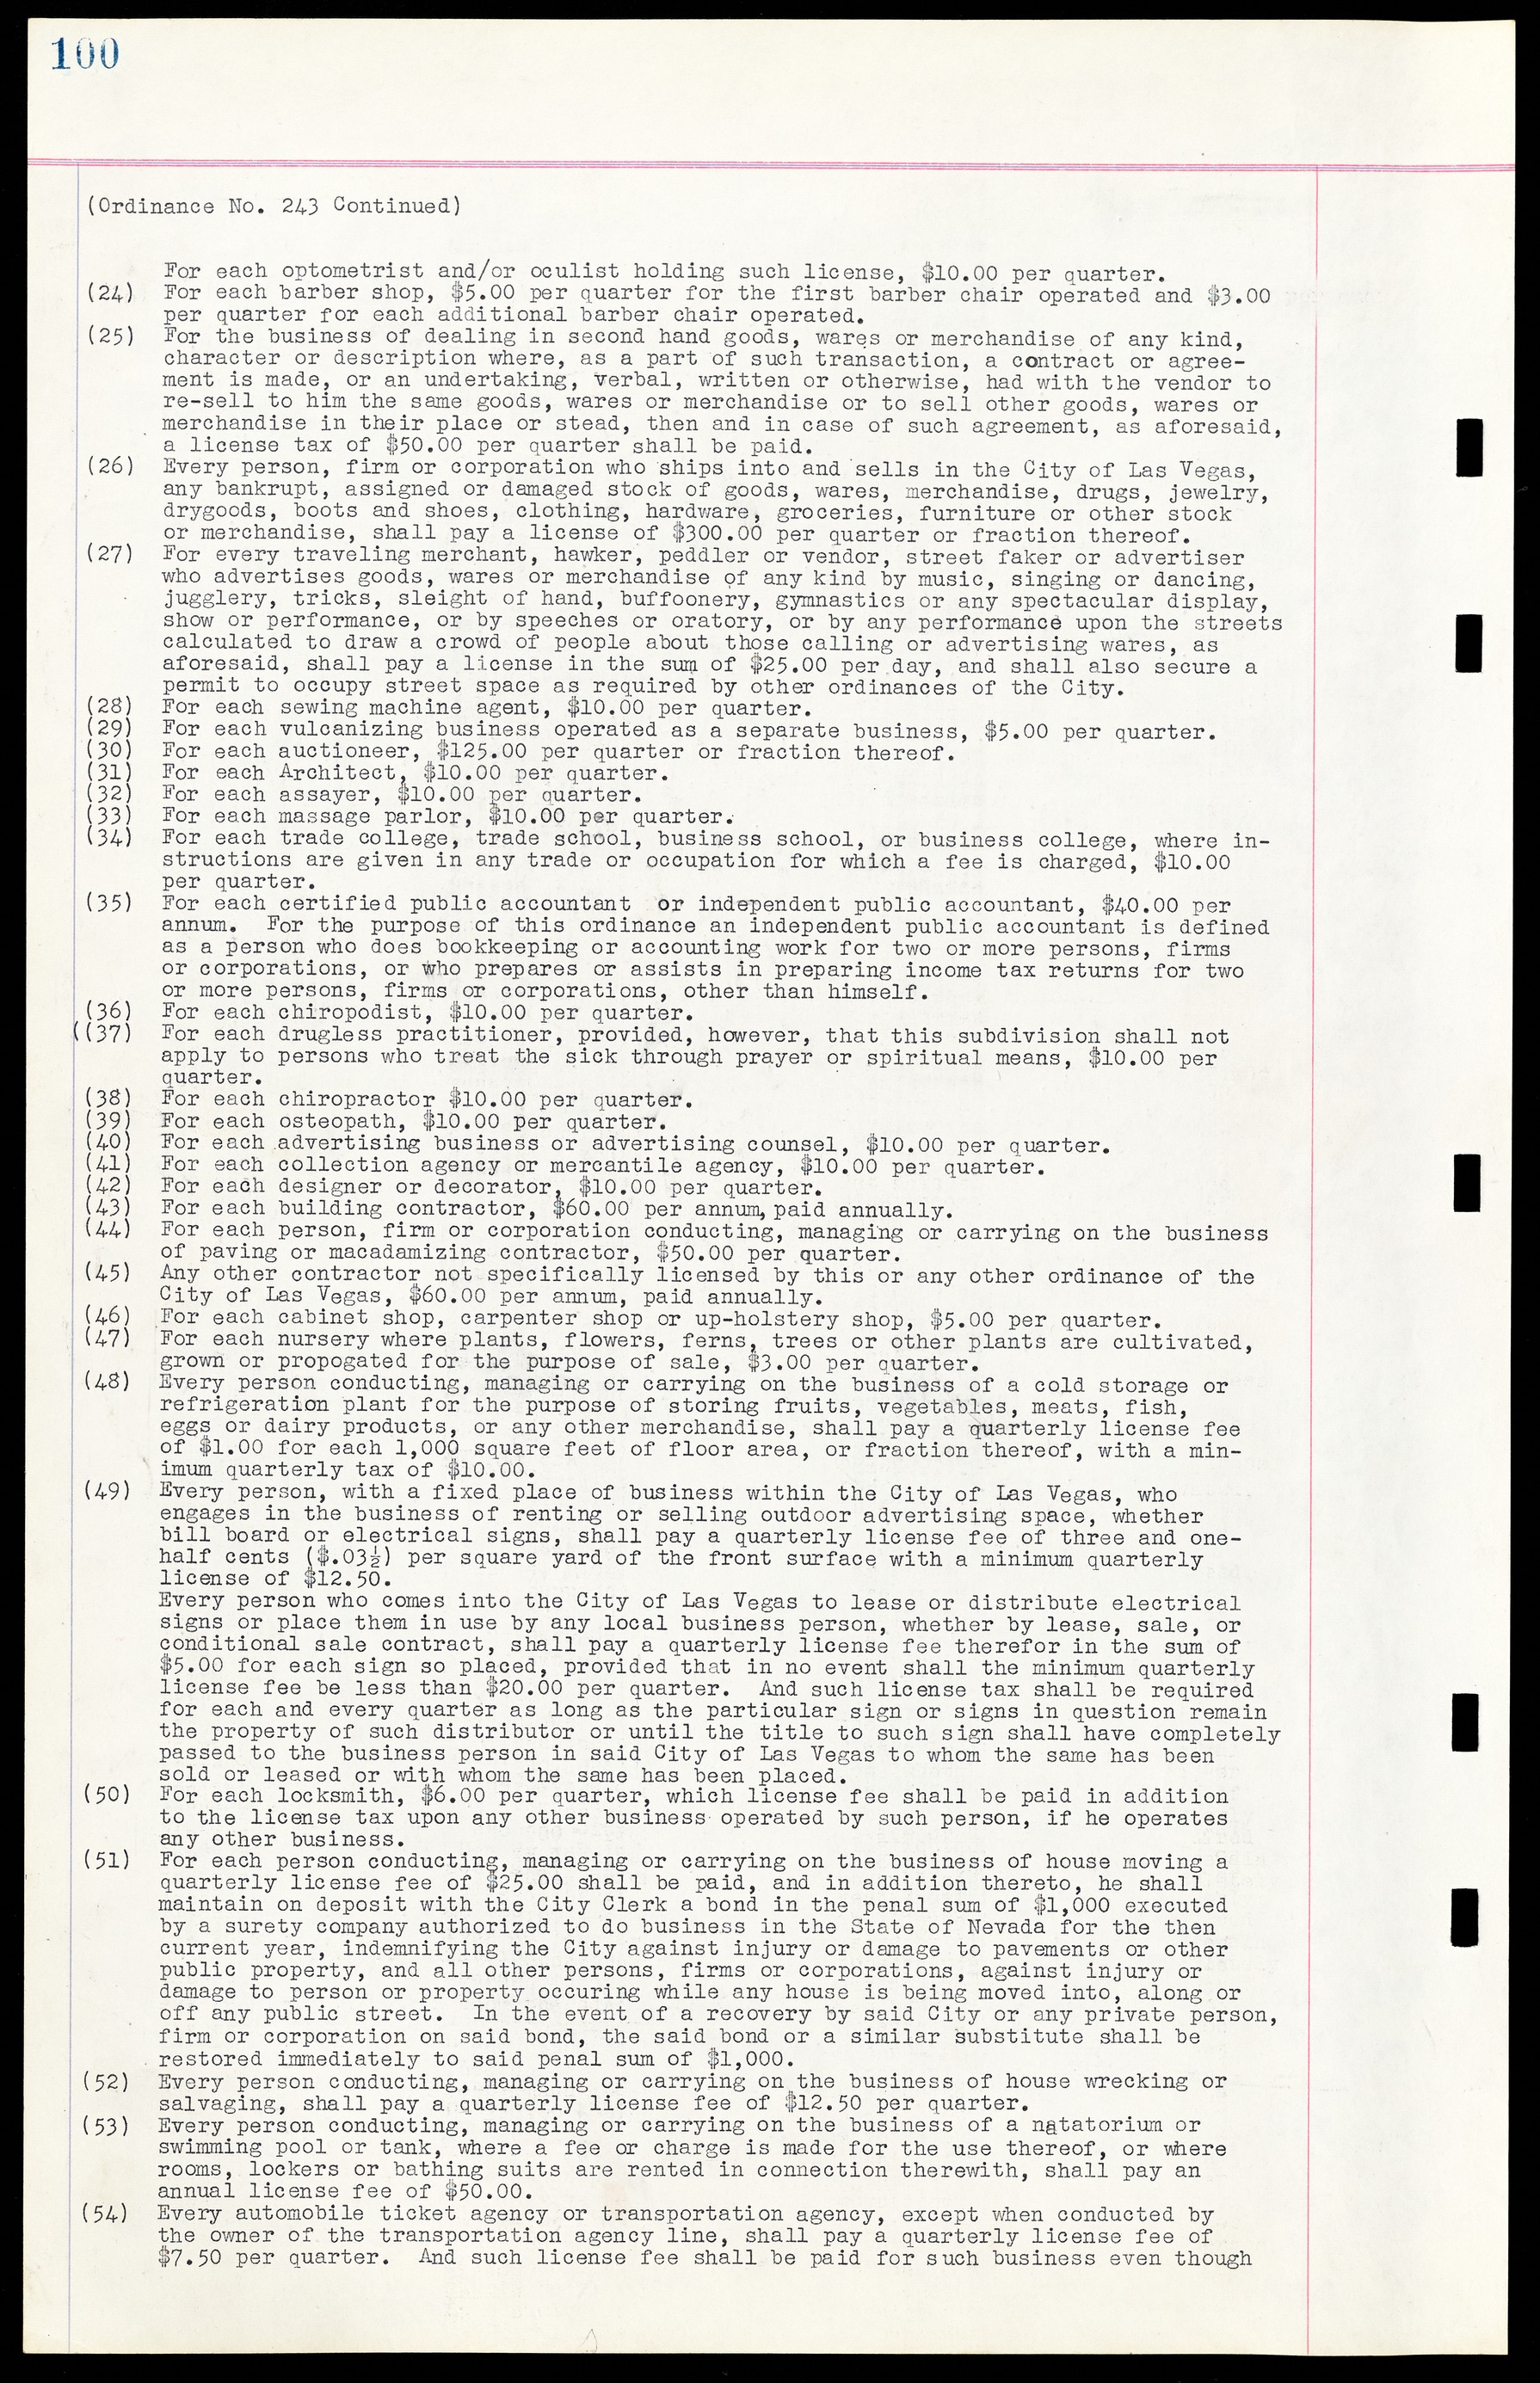 Las Vegas City Ordinances, March 31, 1933 to October 25, 1950, lvc000014-118